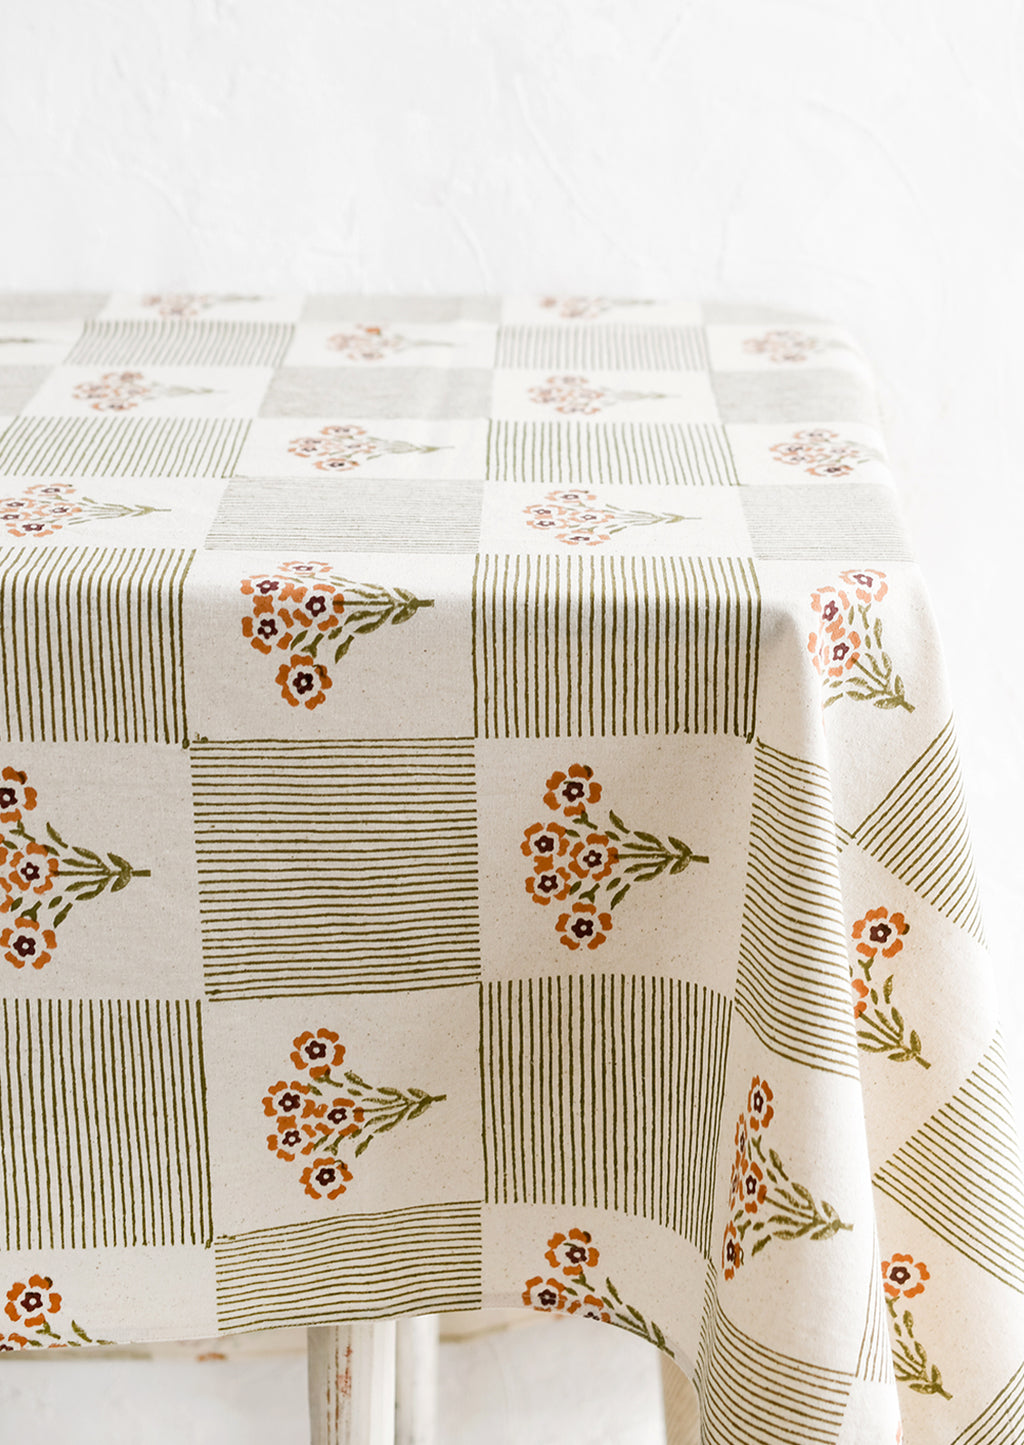 2: A floral check print cotton tablecloth.